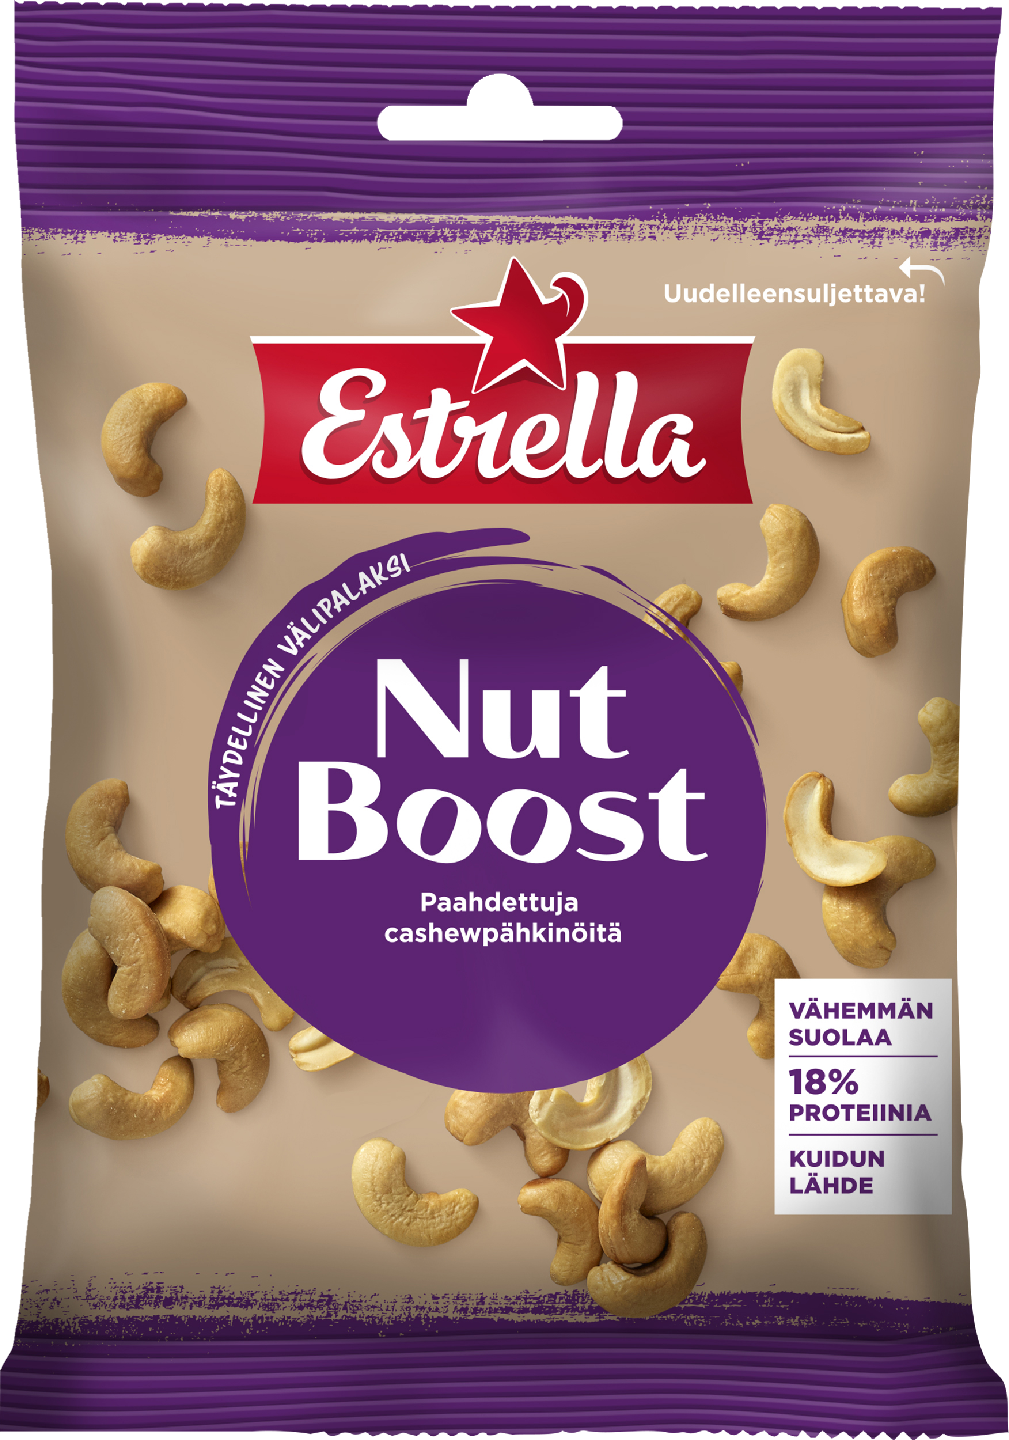 Estrella Nutboost 120g cashewpähkinät